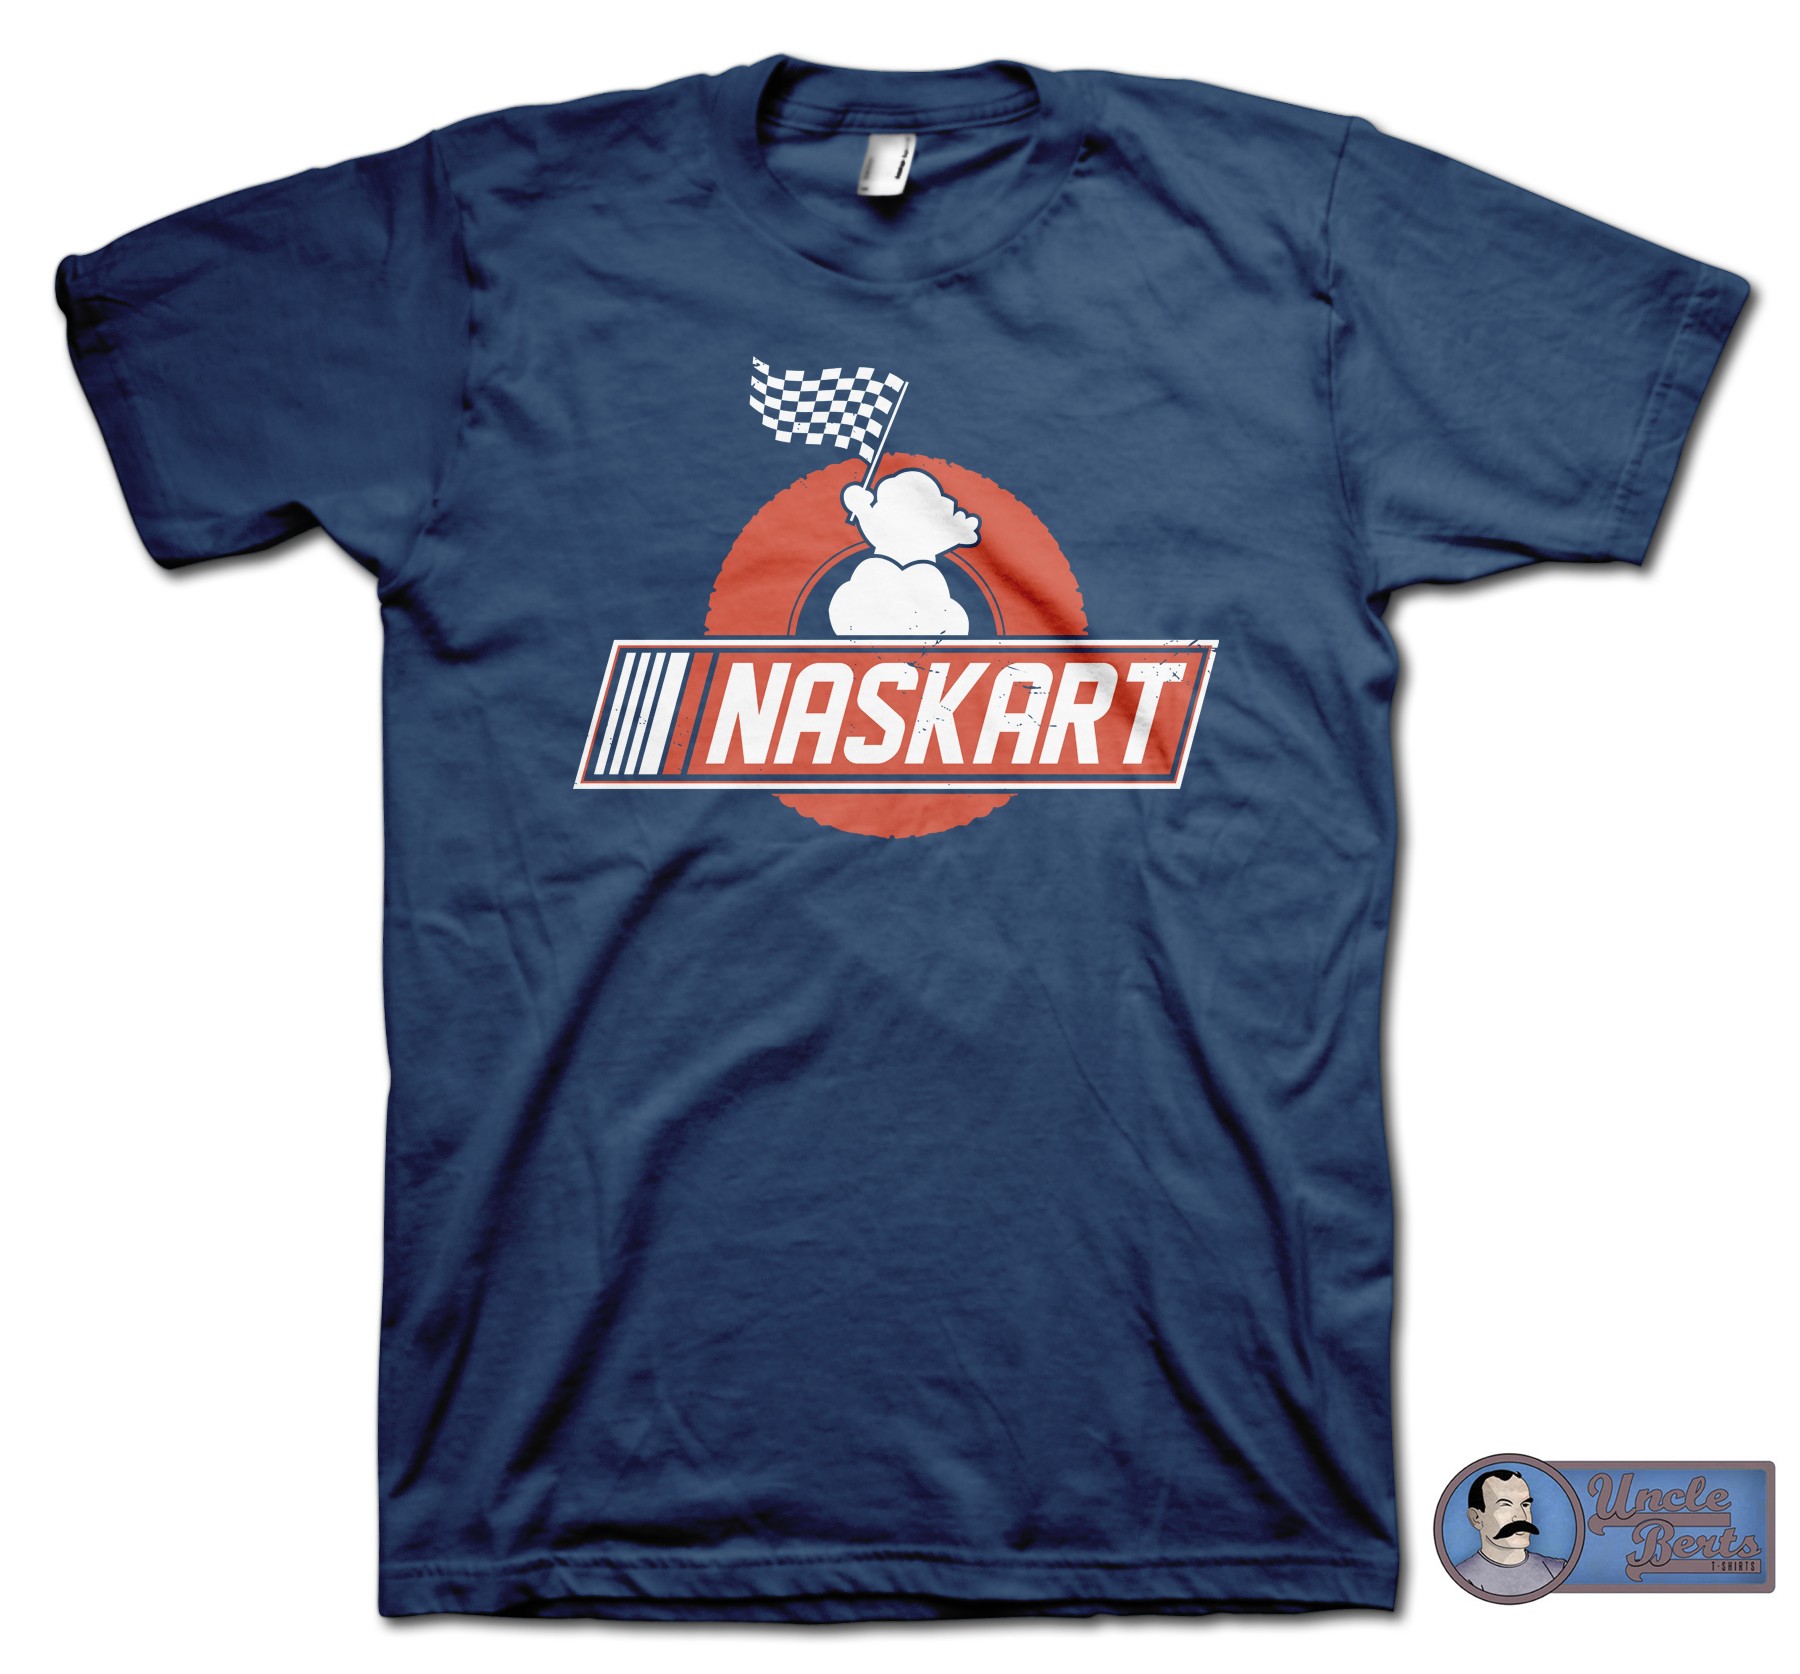 Naskart T-Shirt - inspired by the Mario Kart series